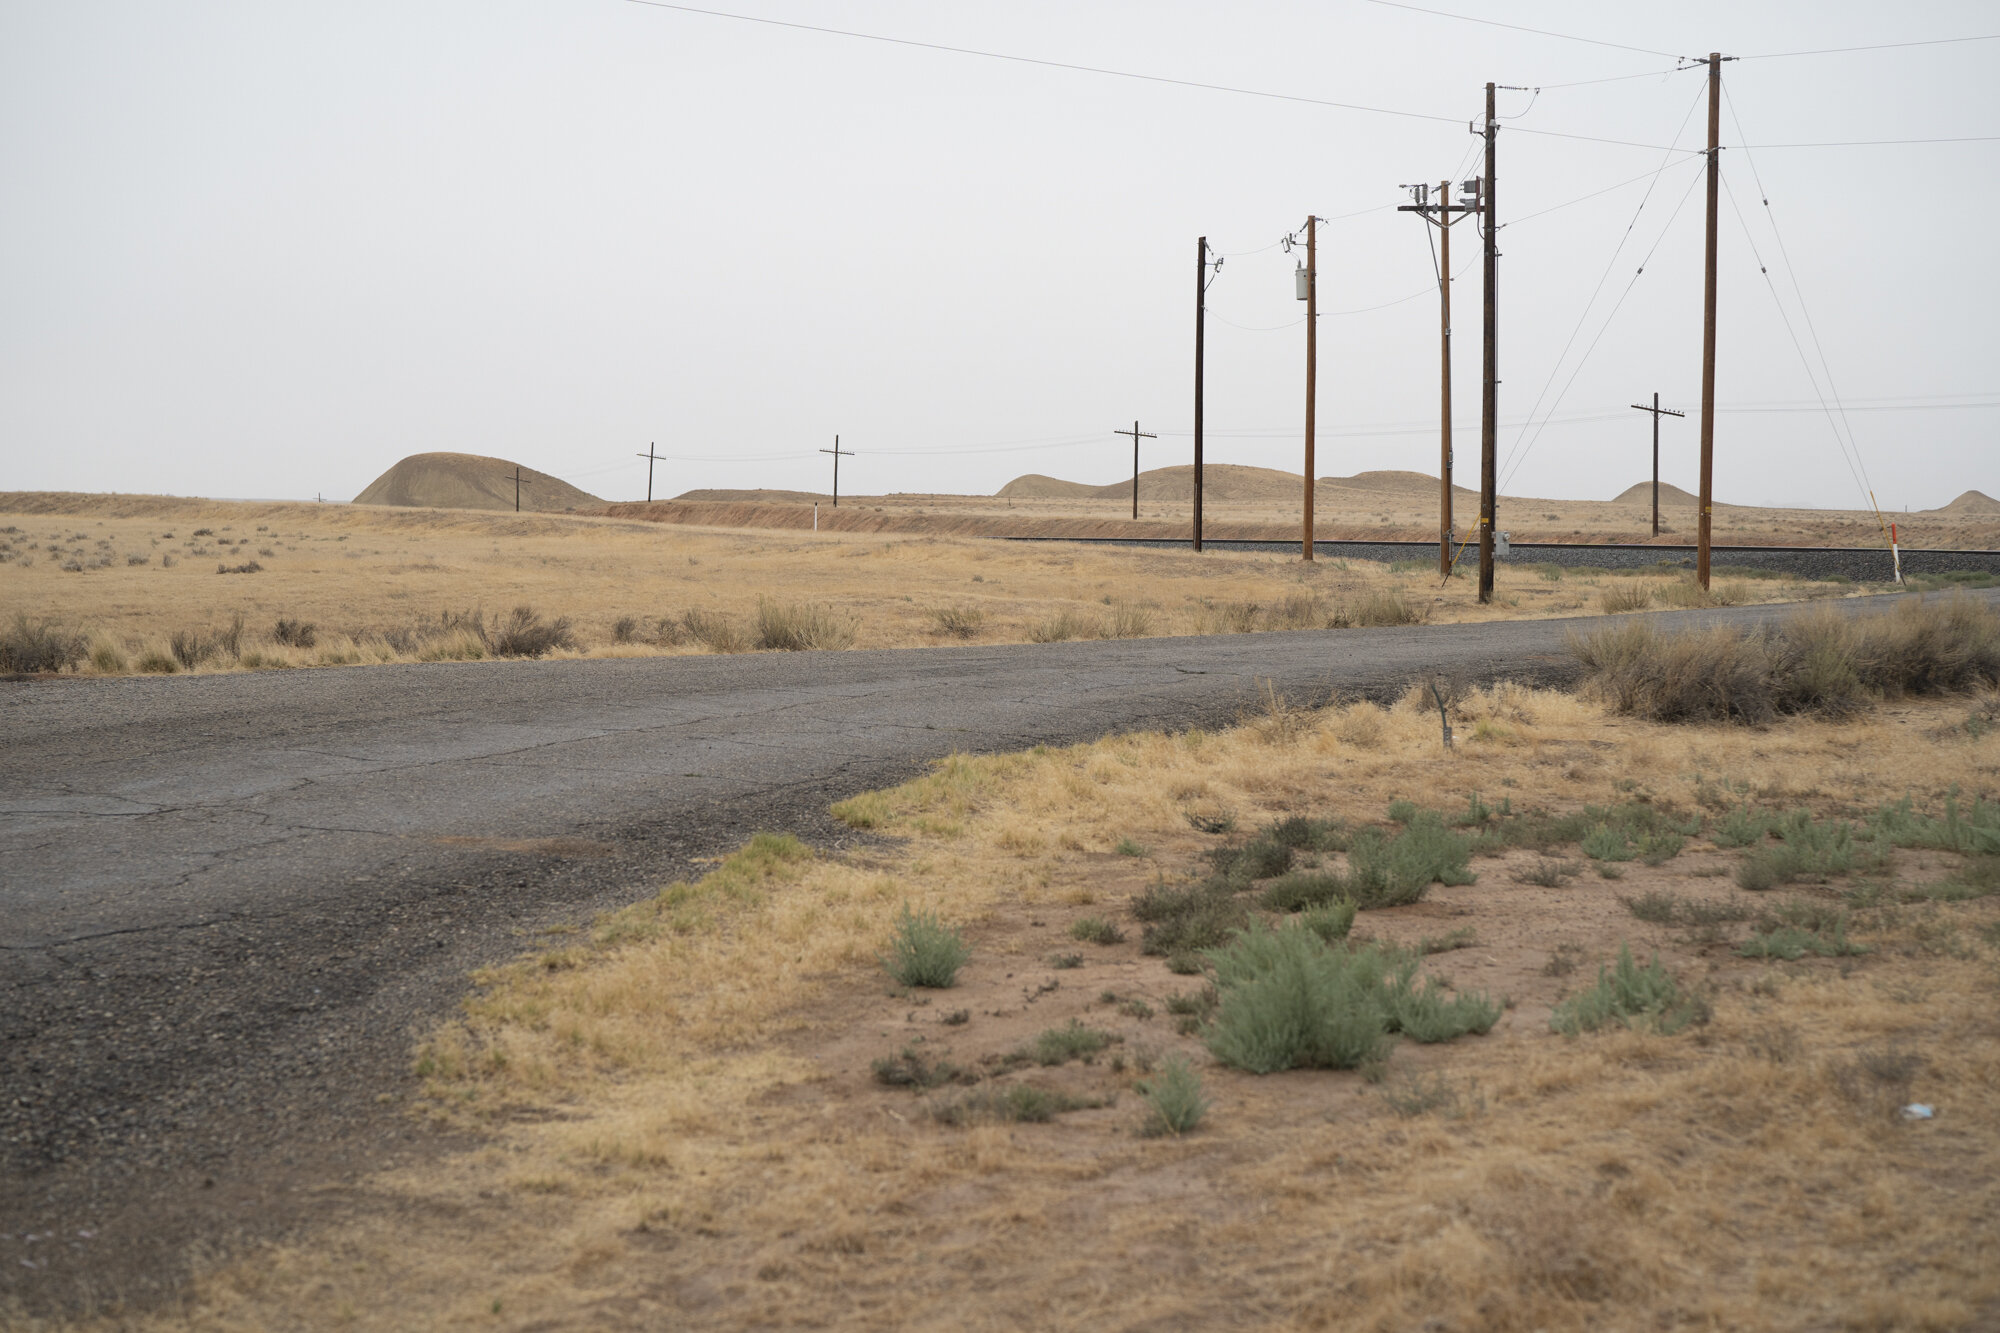  A desolate street scene in rural Utah.  